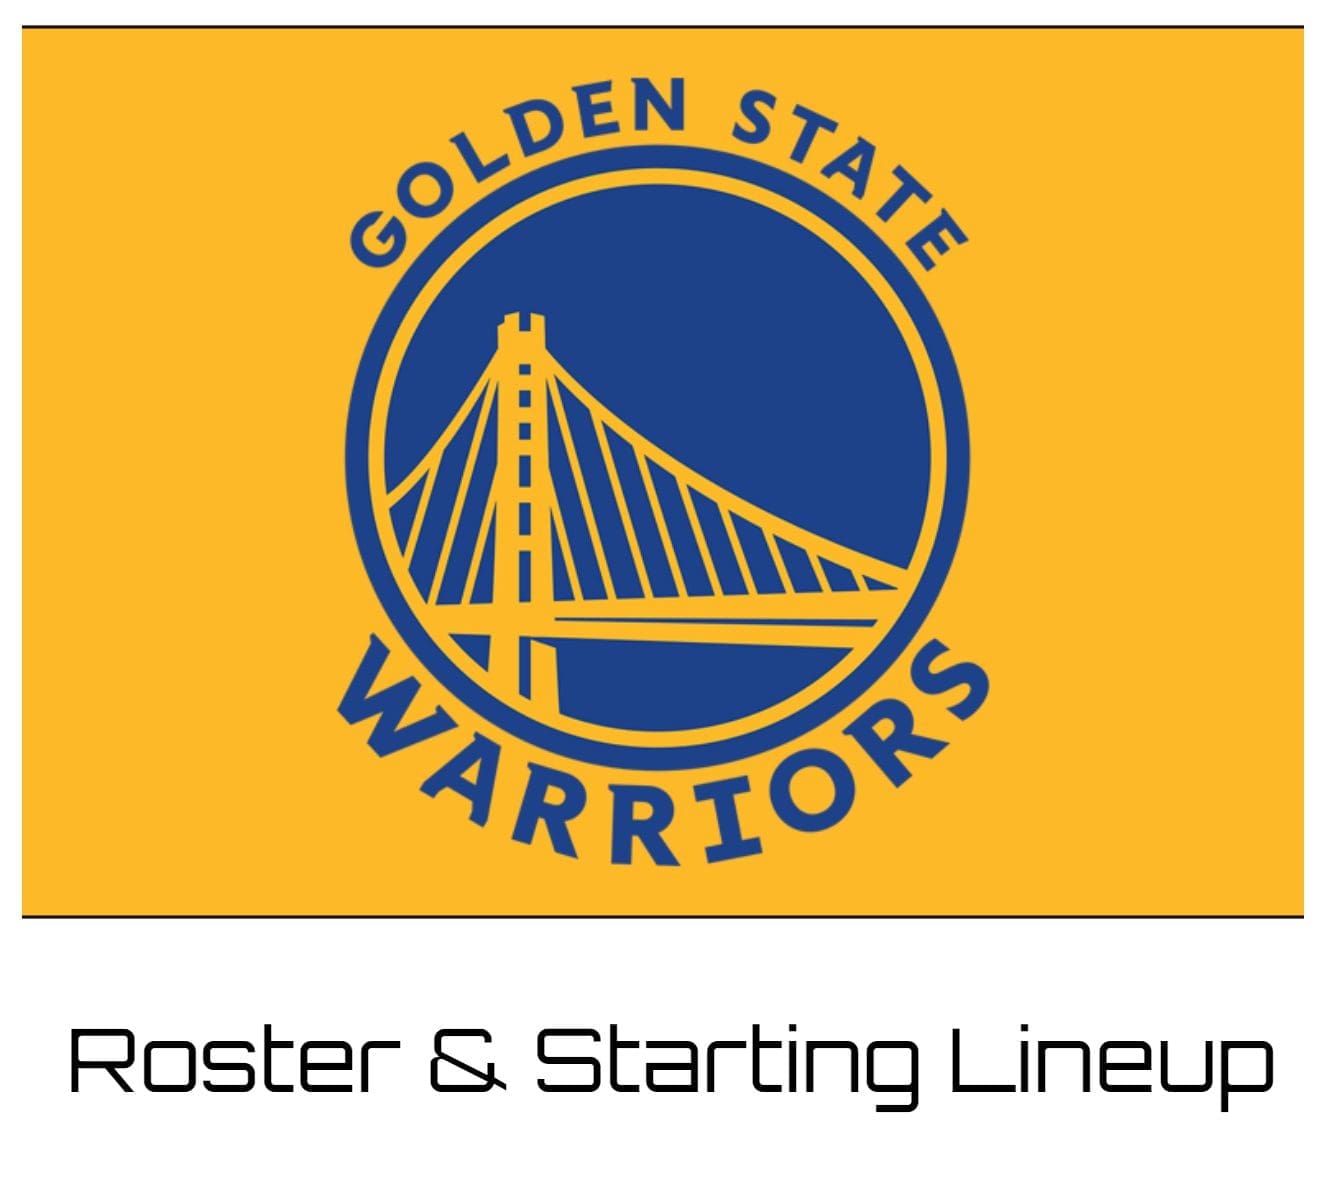 Golden State Warriors Roster